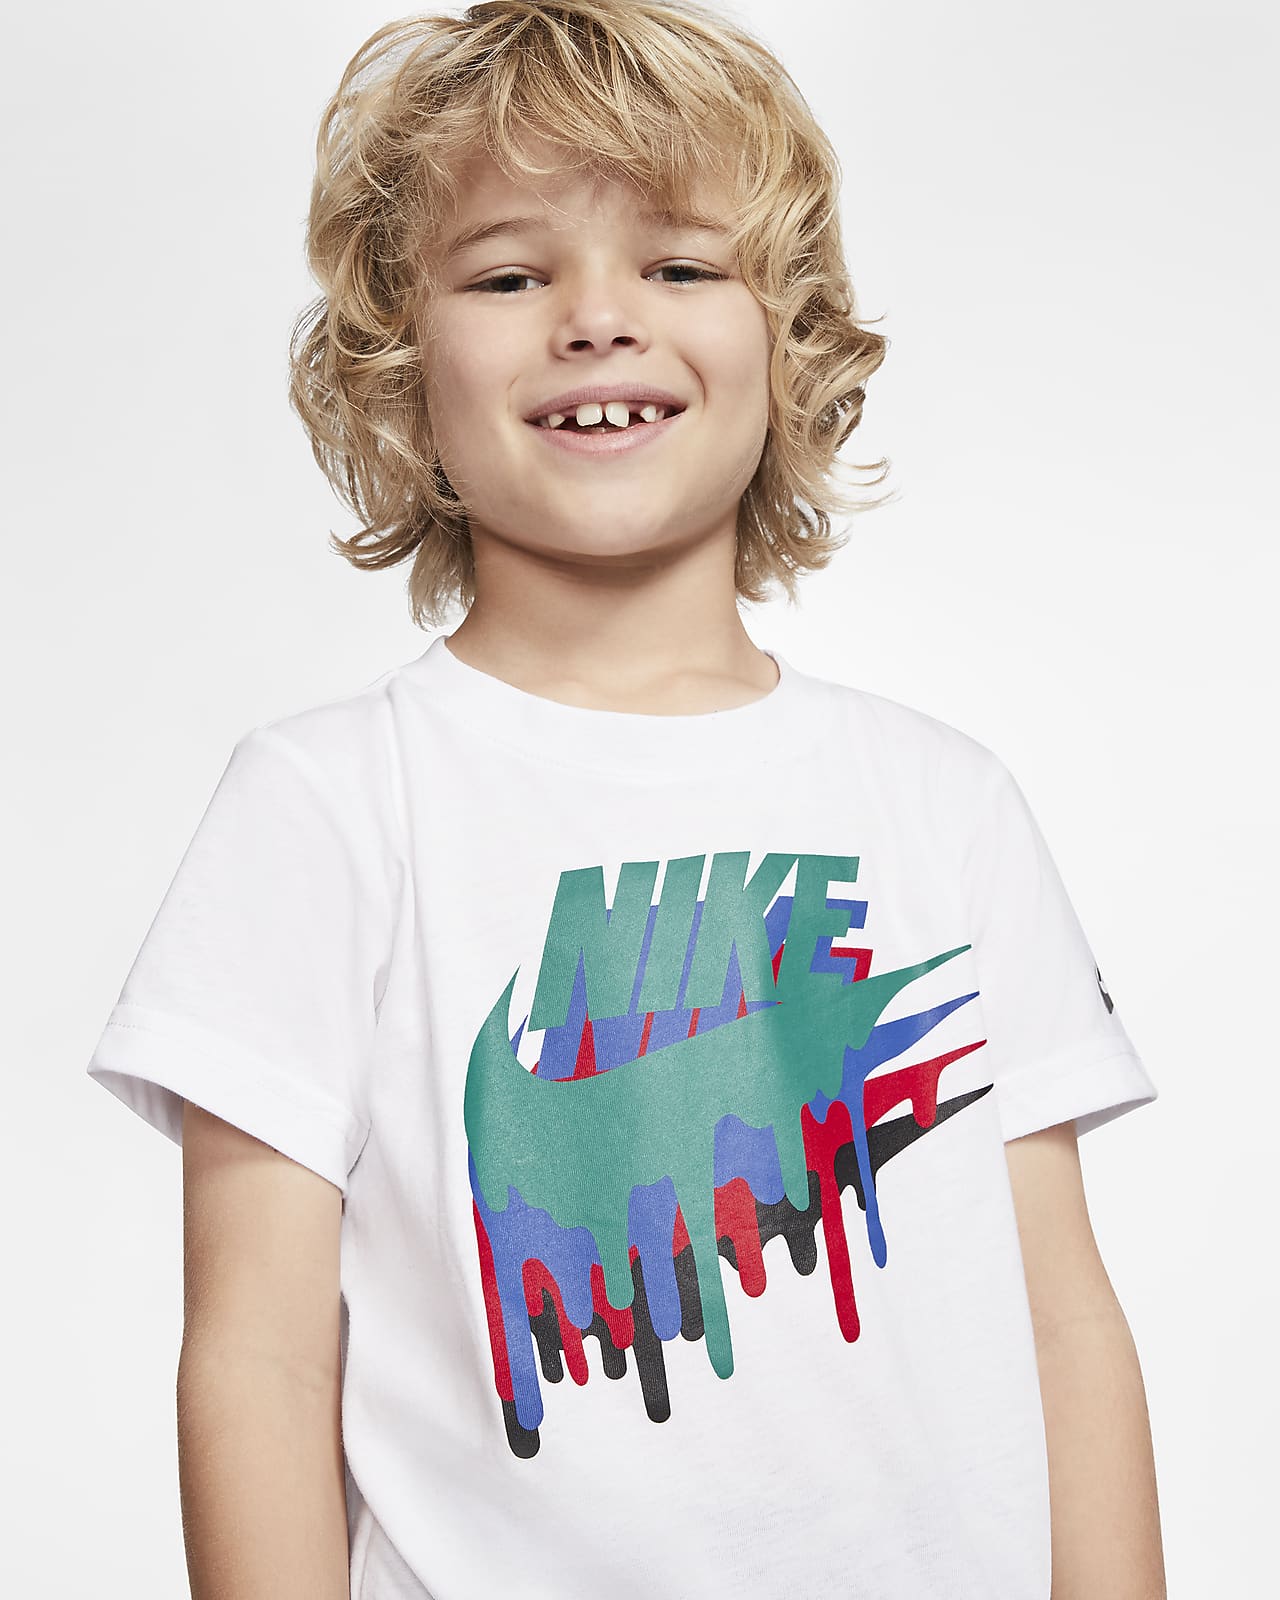 Kids' Nike T-shirts